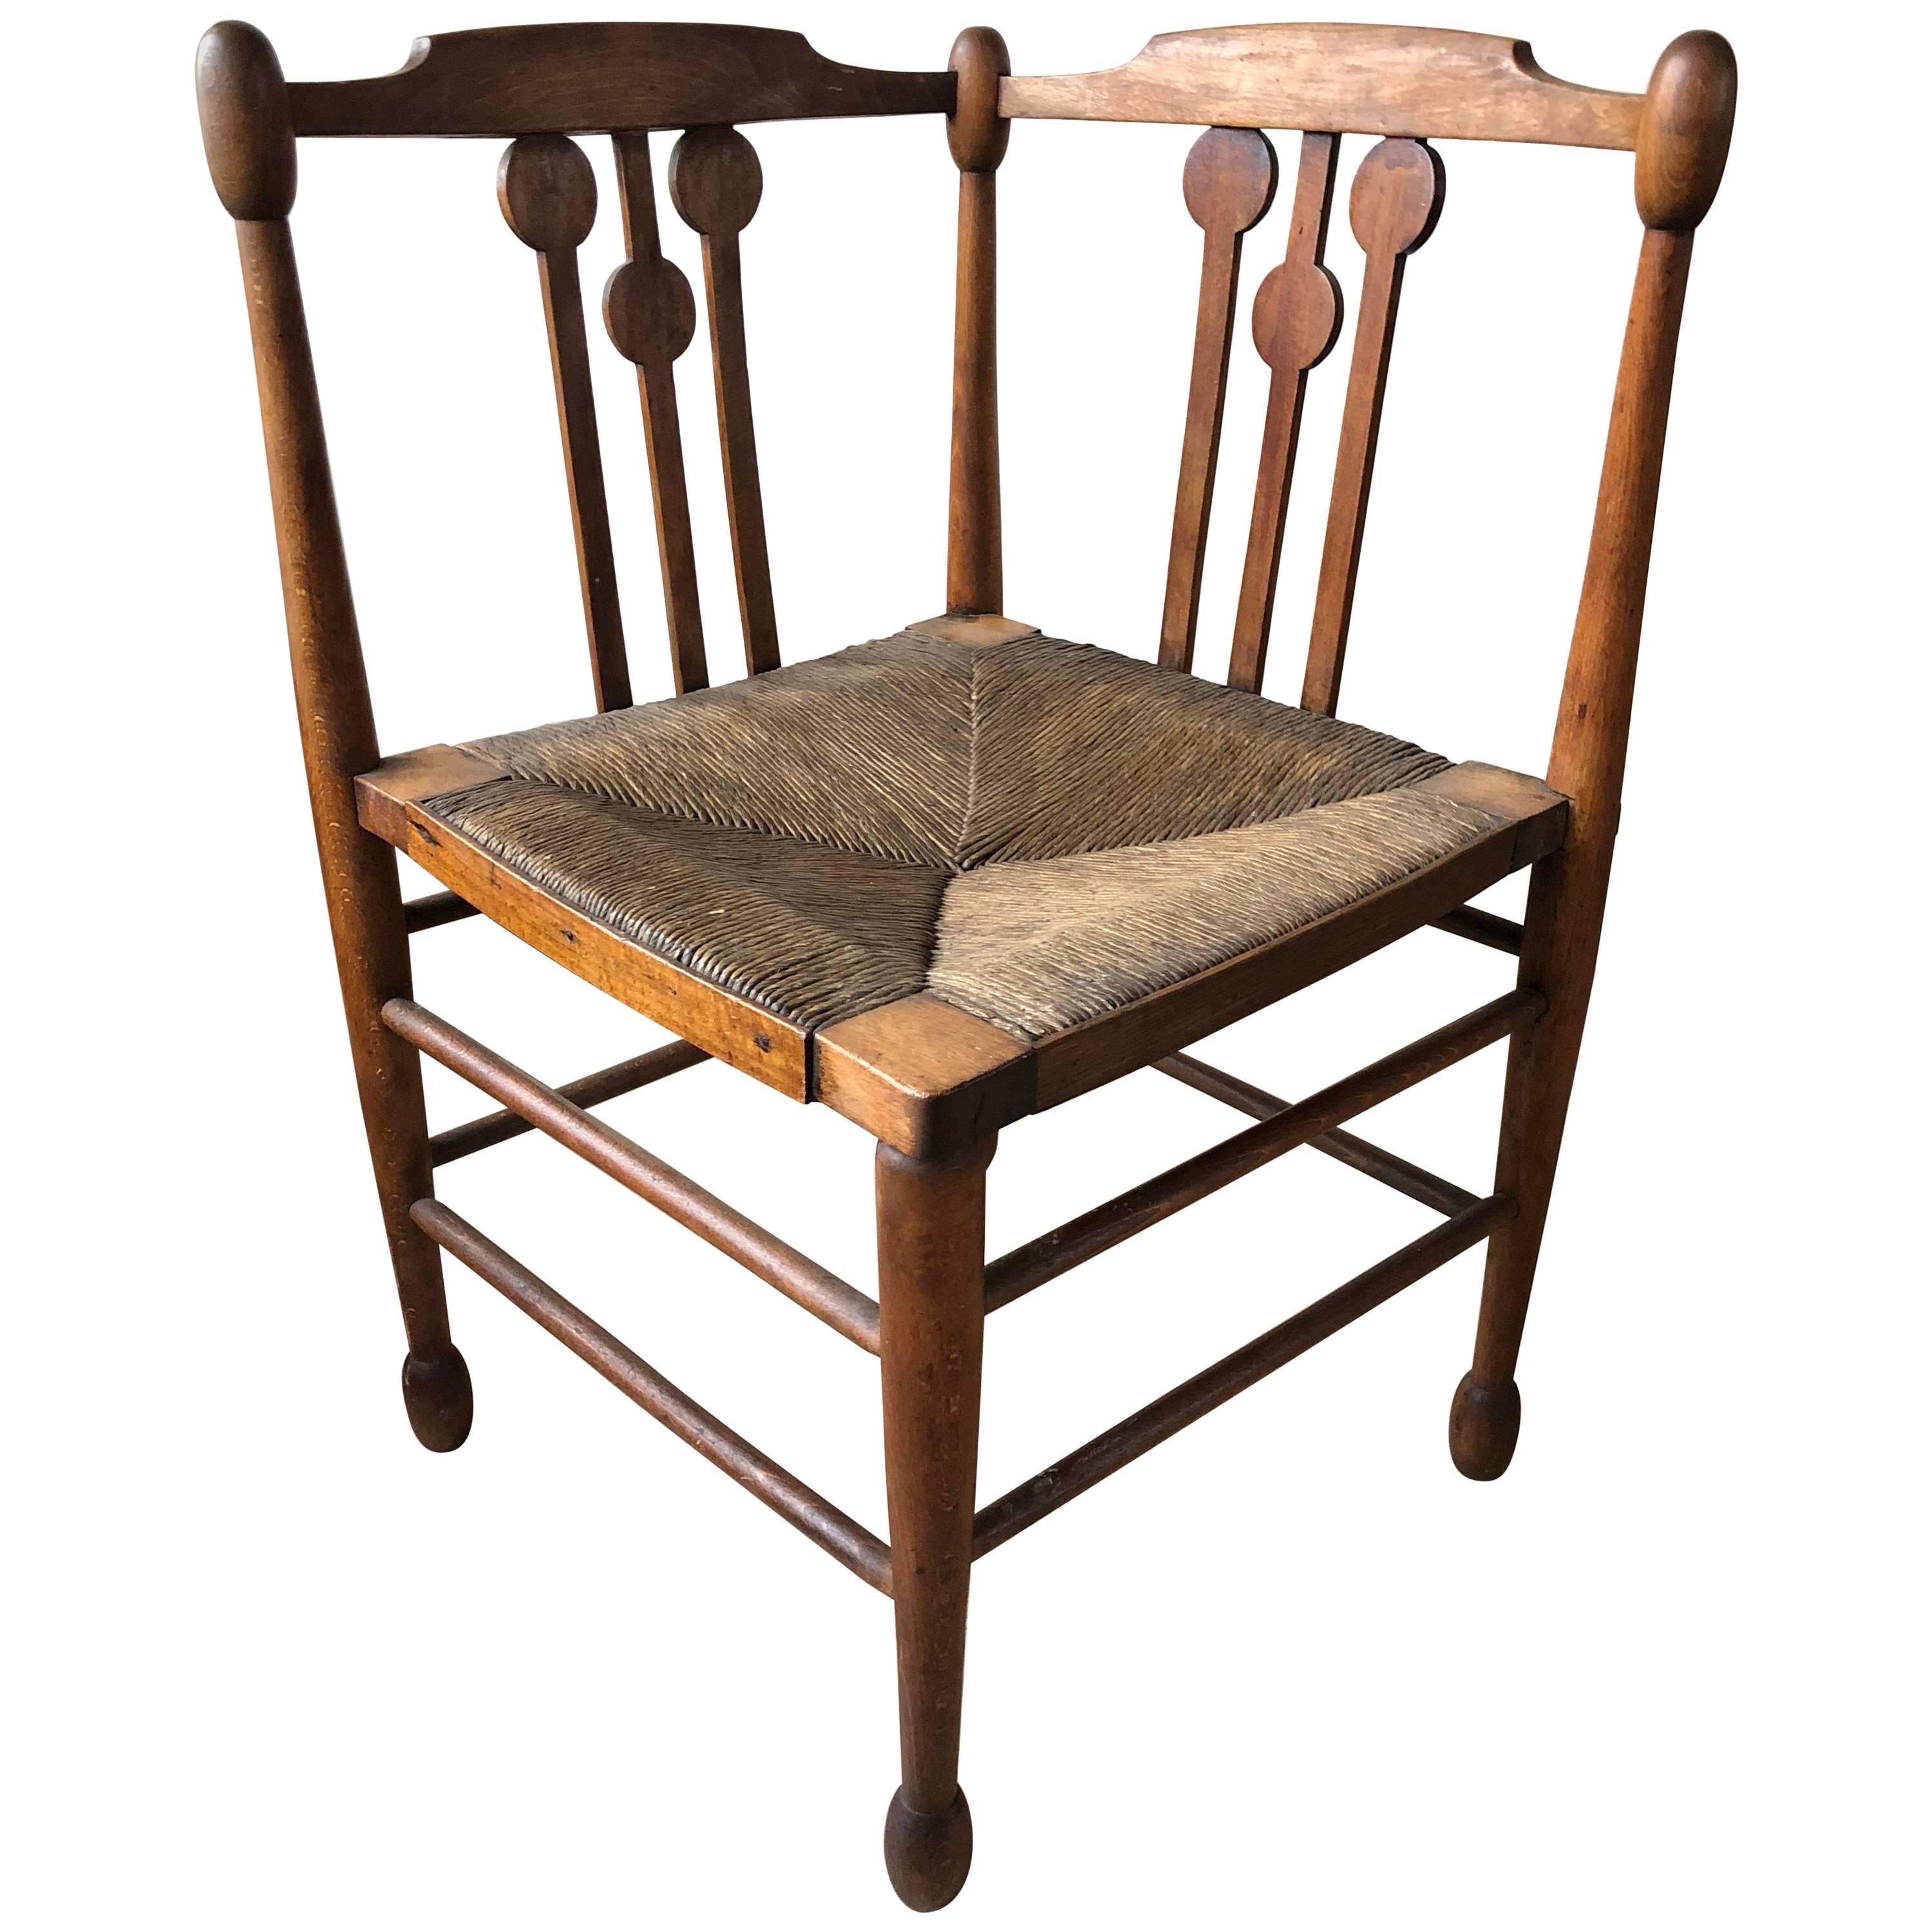 English Arts & Crafts Period Corner Chair